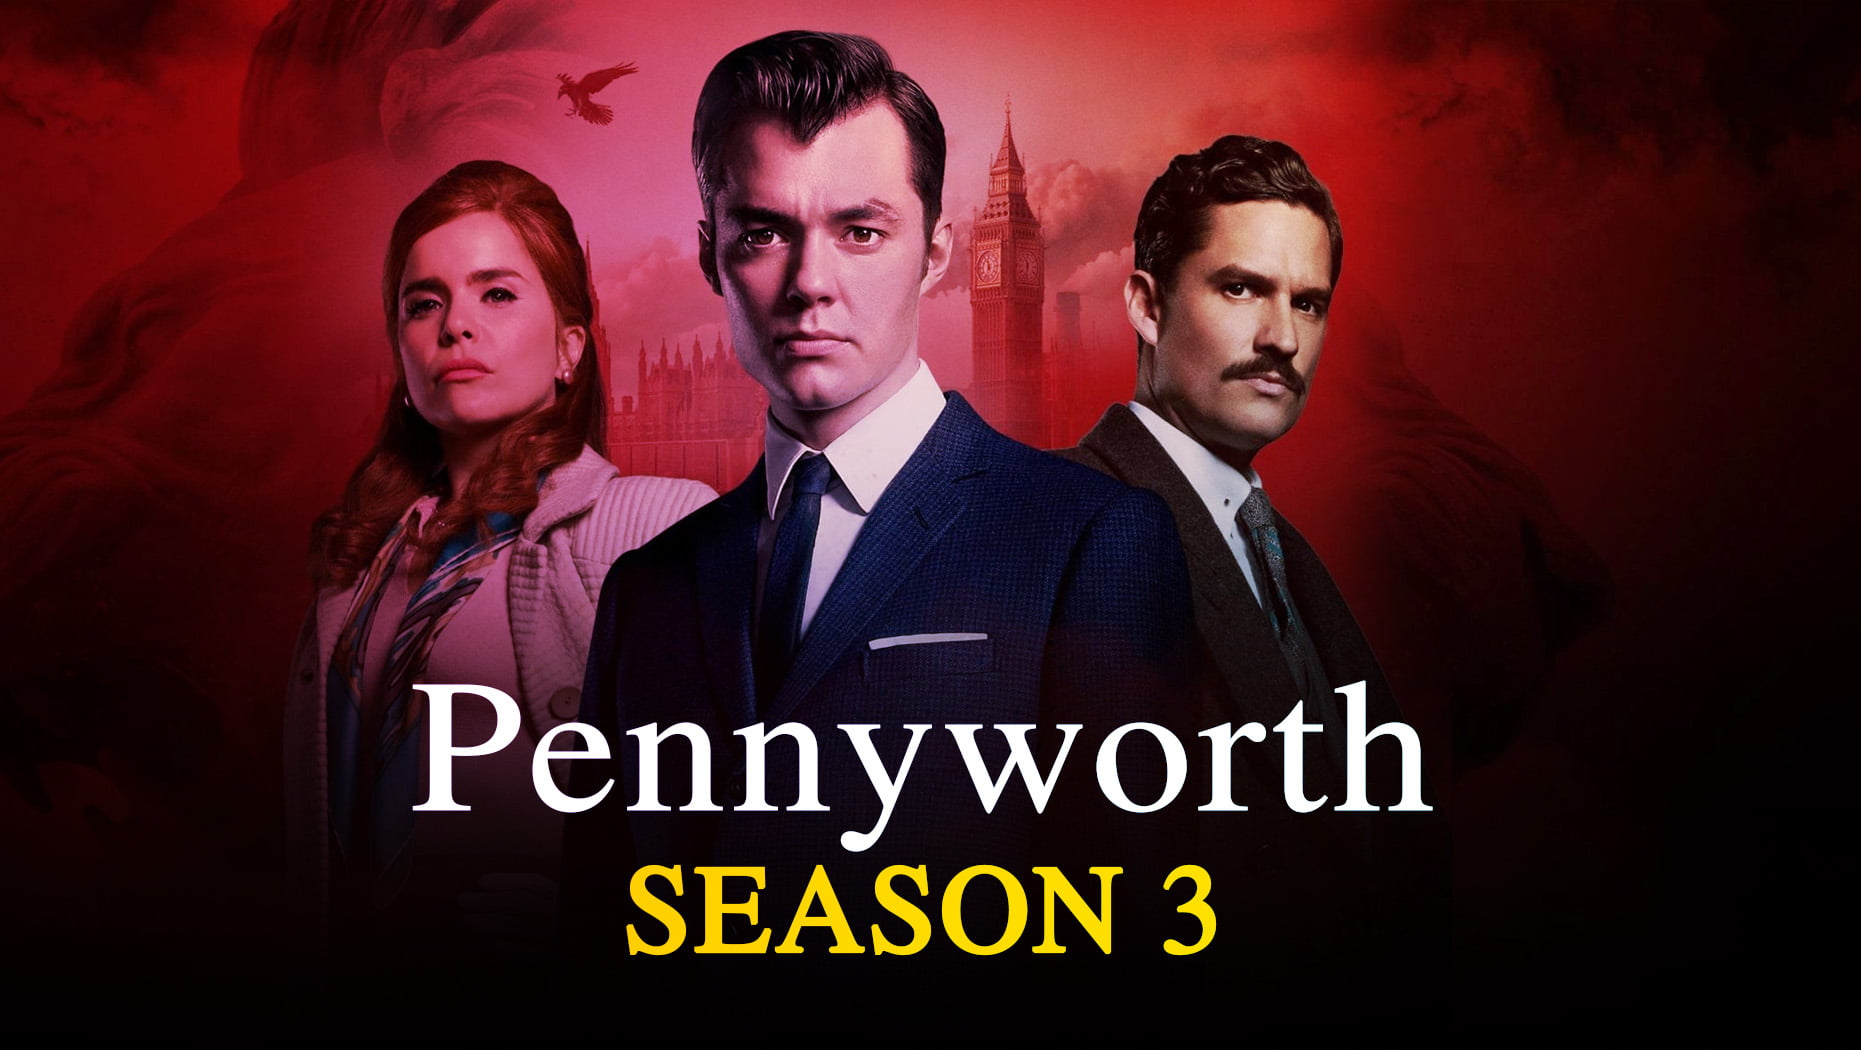 "Pennyworth" Season 3